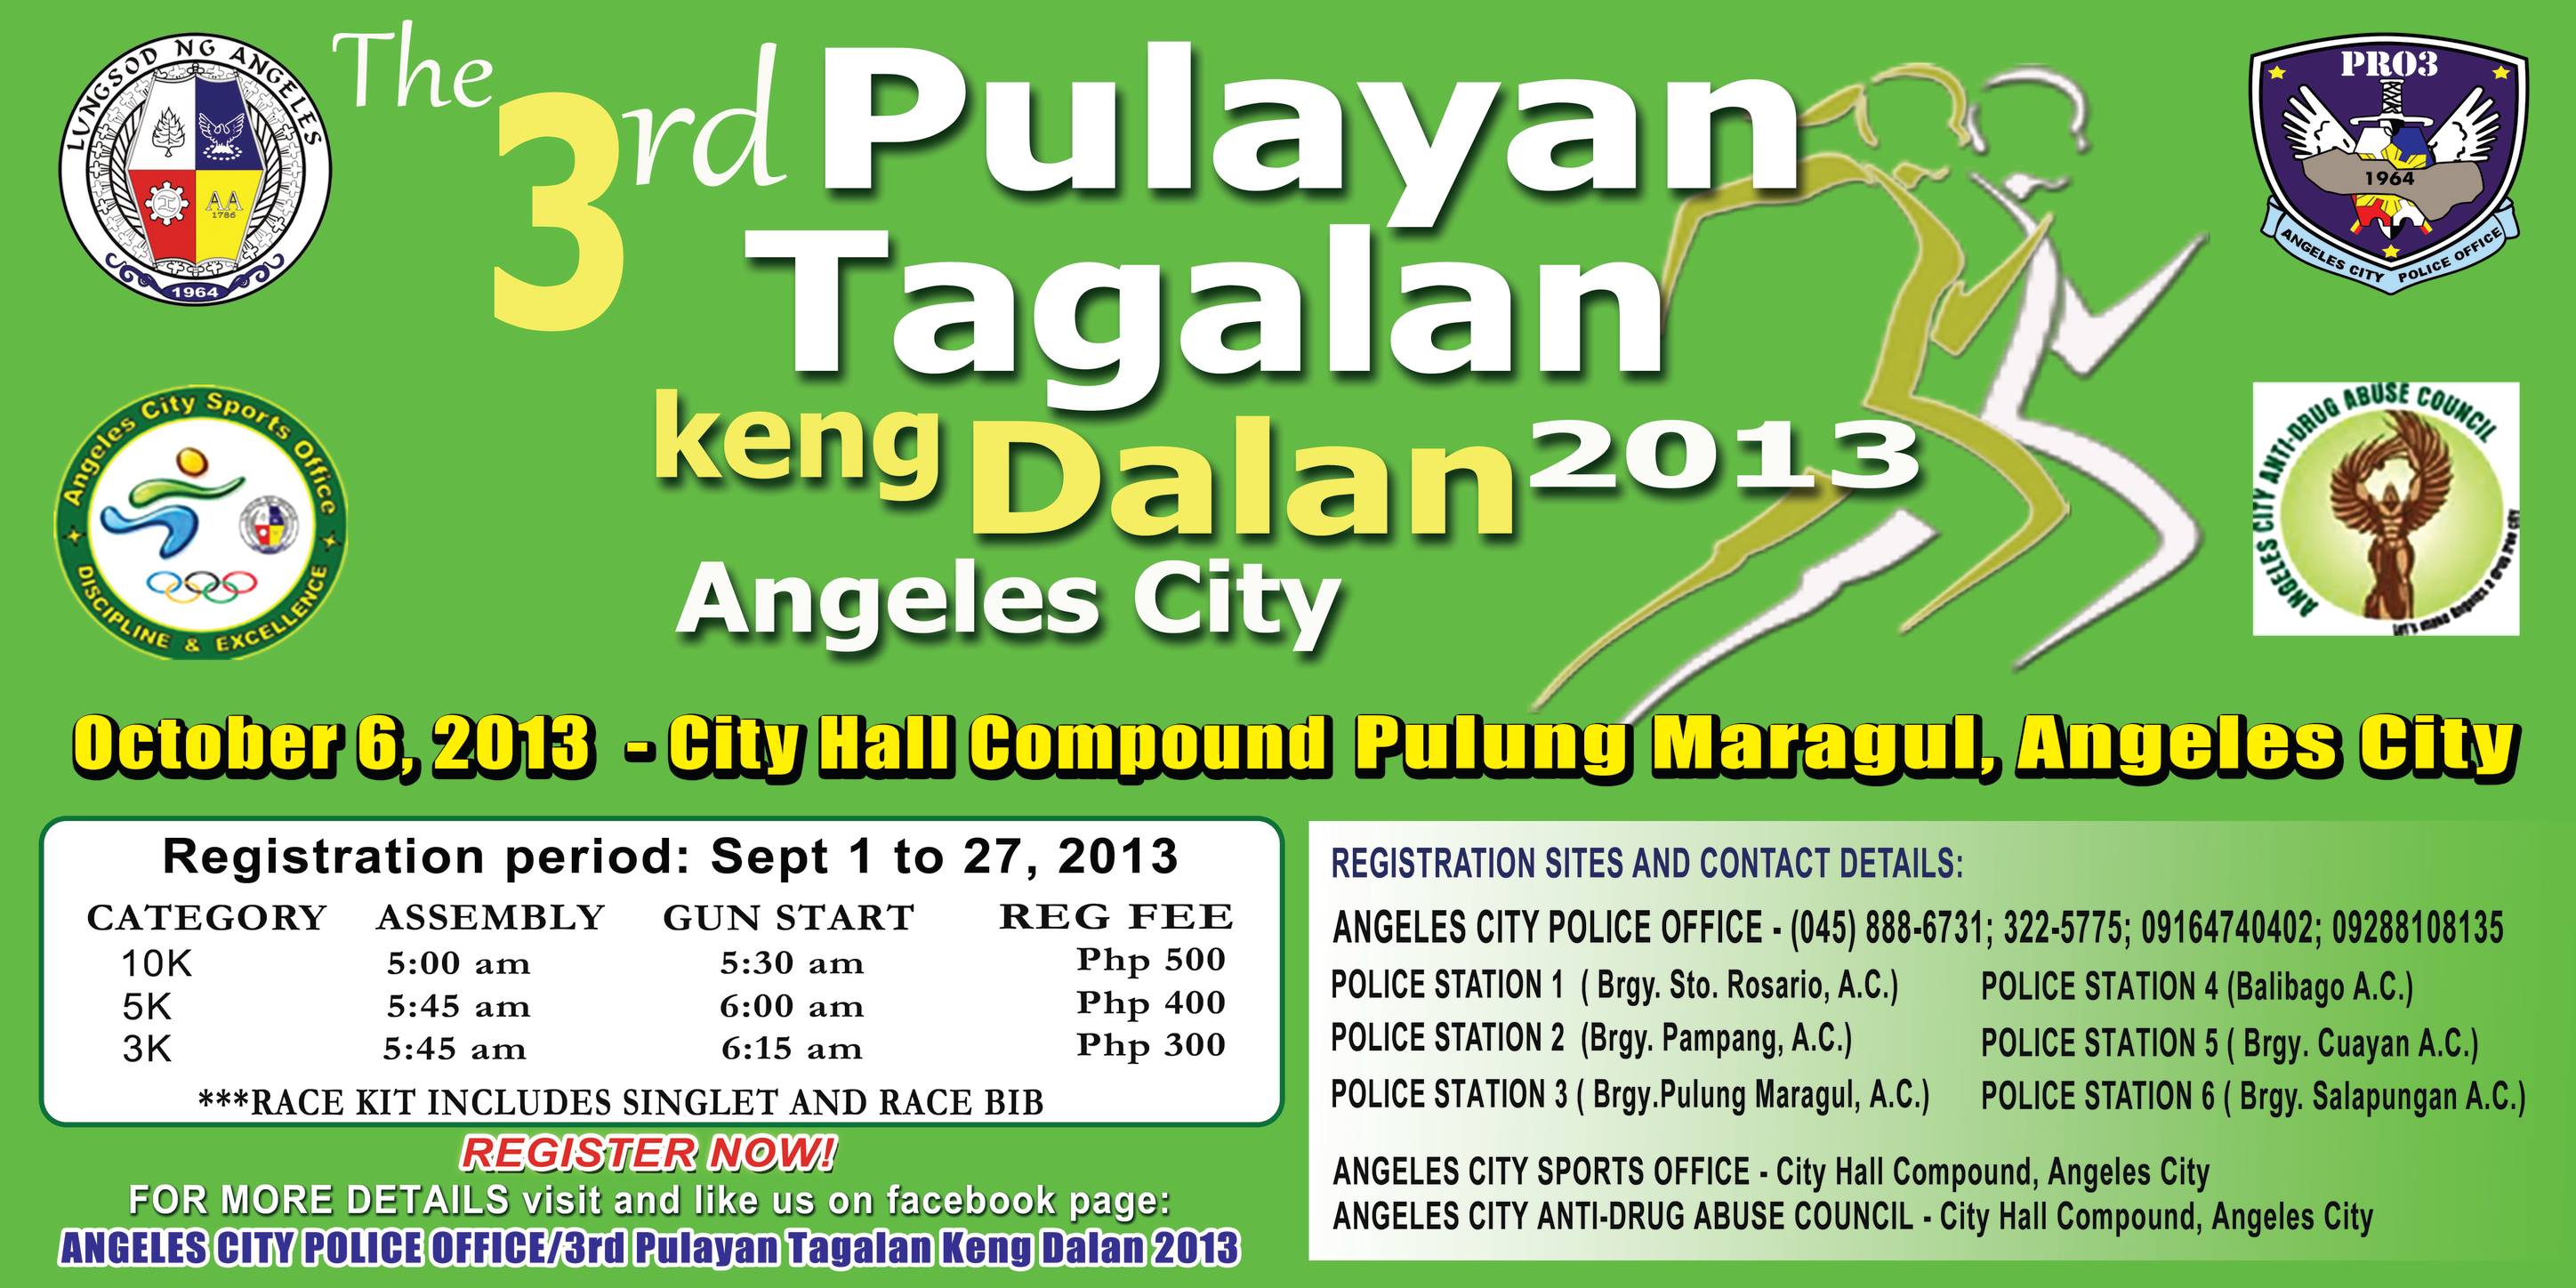 3rd-Pulayan-Tagalan-keng-Dalan-Poster